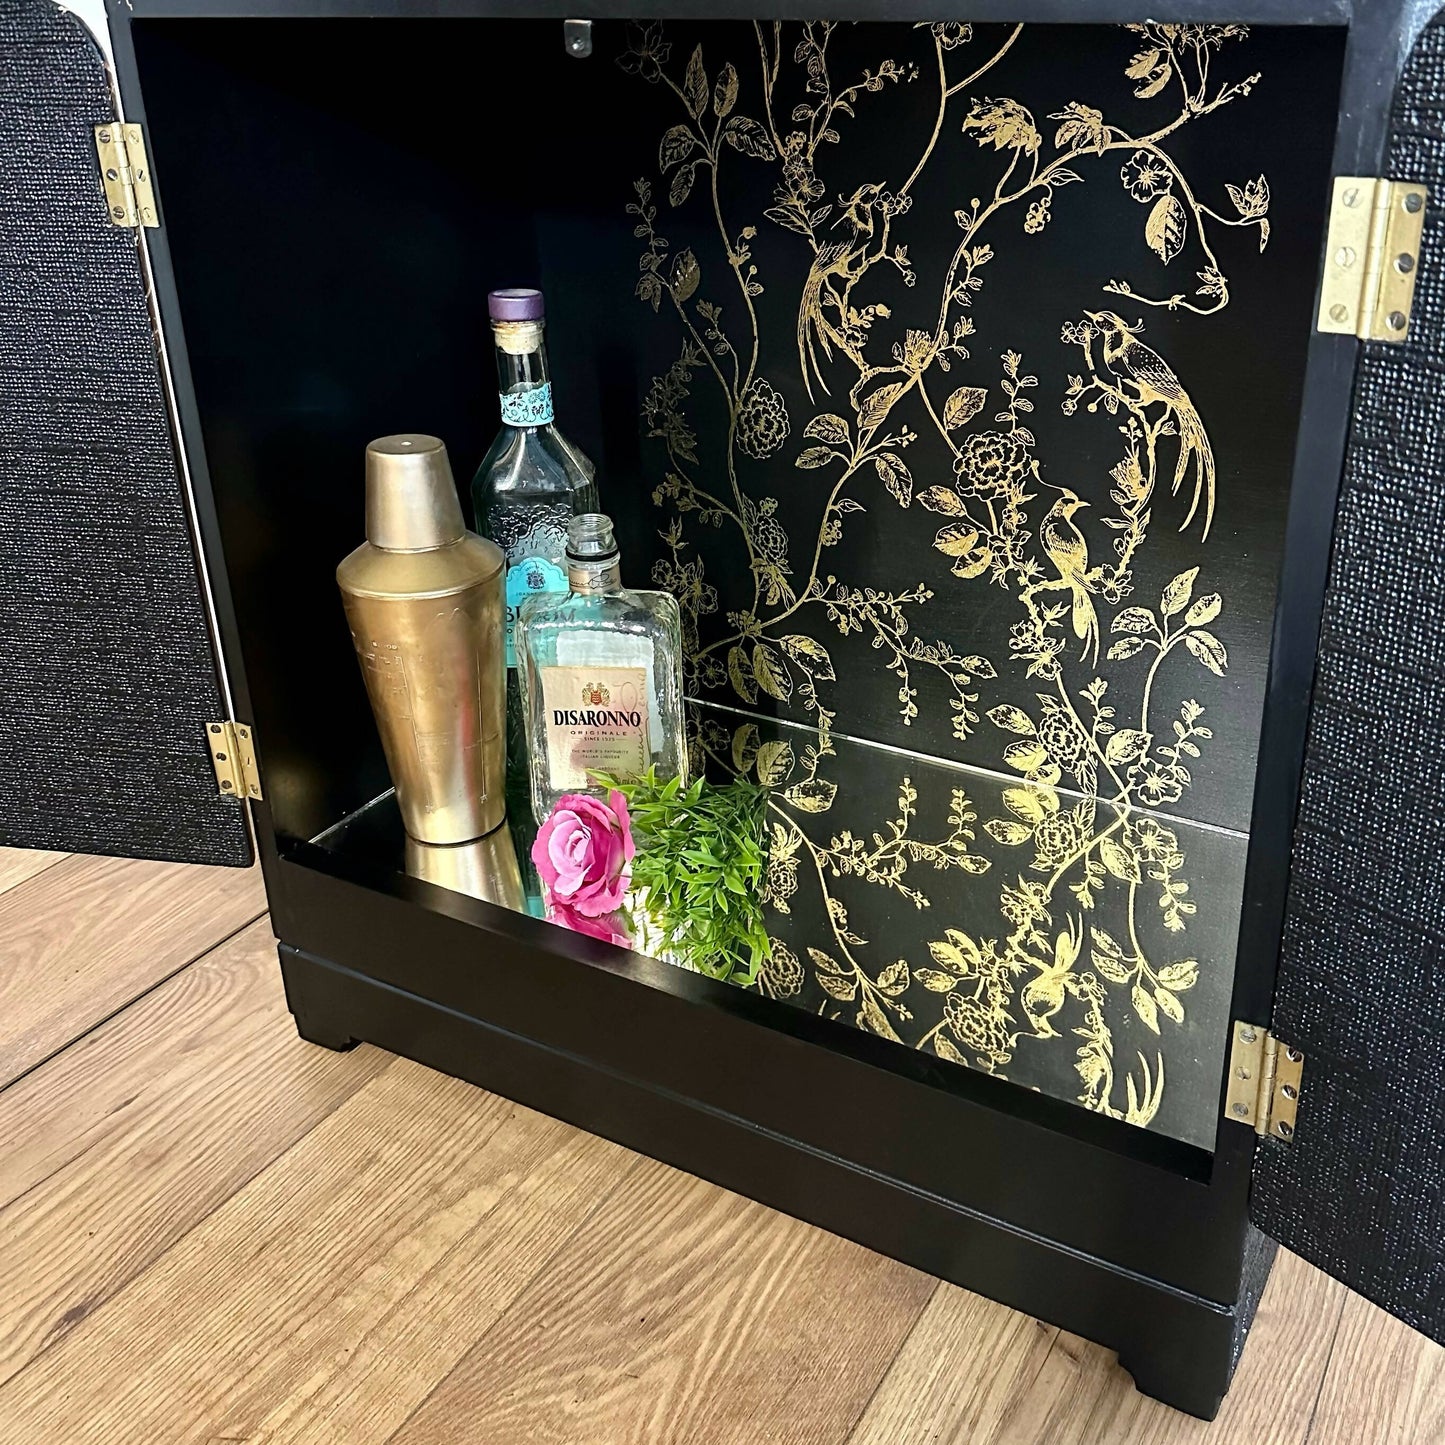 Petit Refurbished art deco cocktail cabinet, vintage black and gold drinks cabinet, birds, sideboard, dresser, gin bar, hand painted,